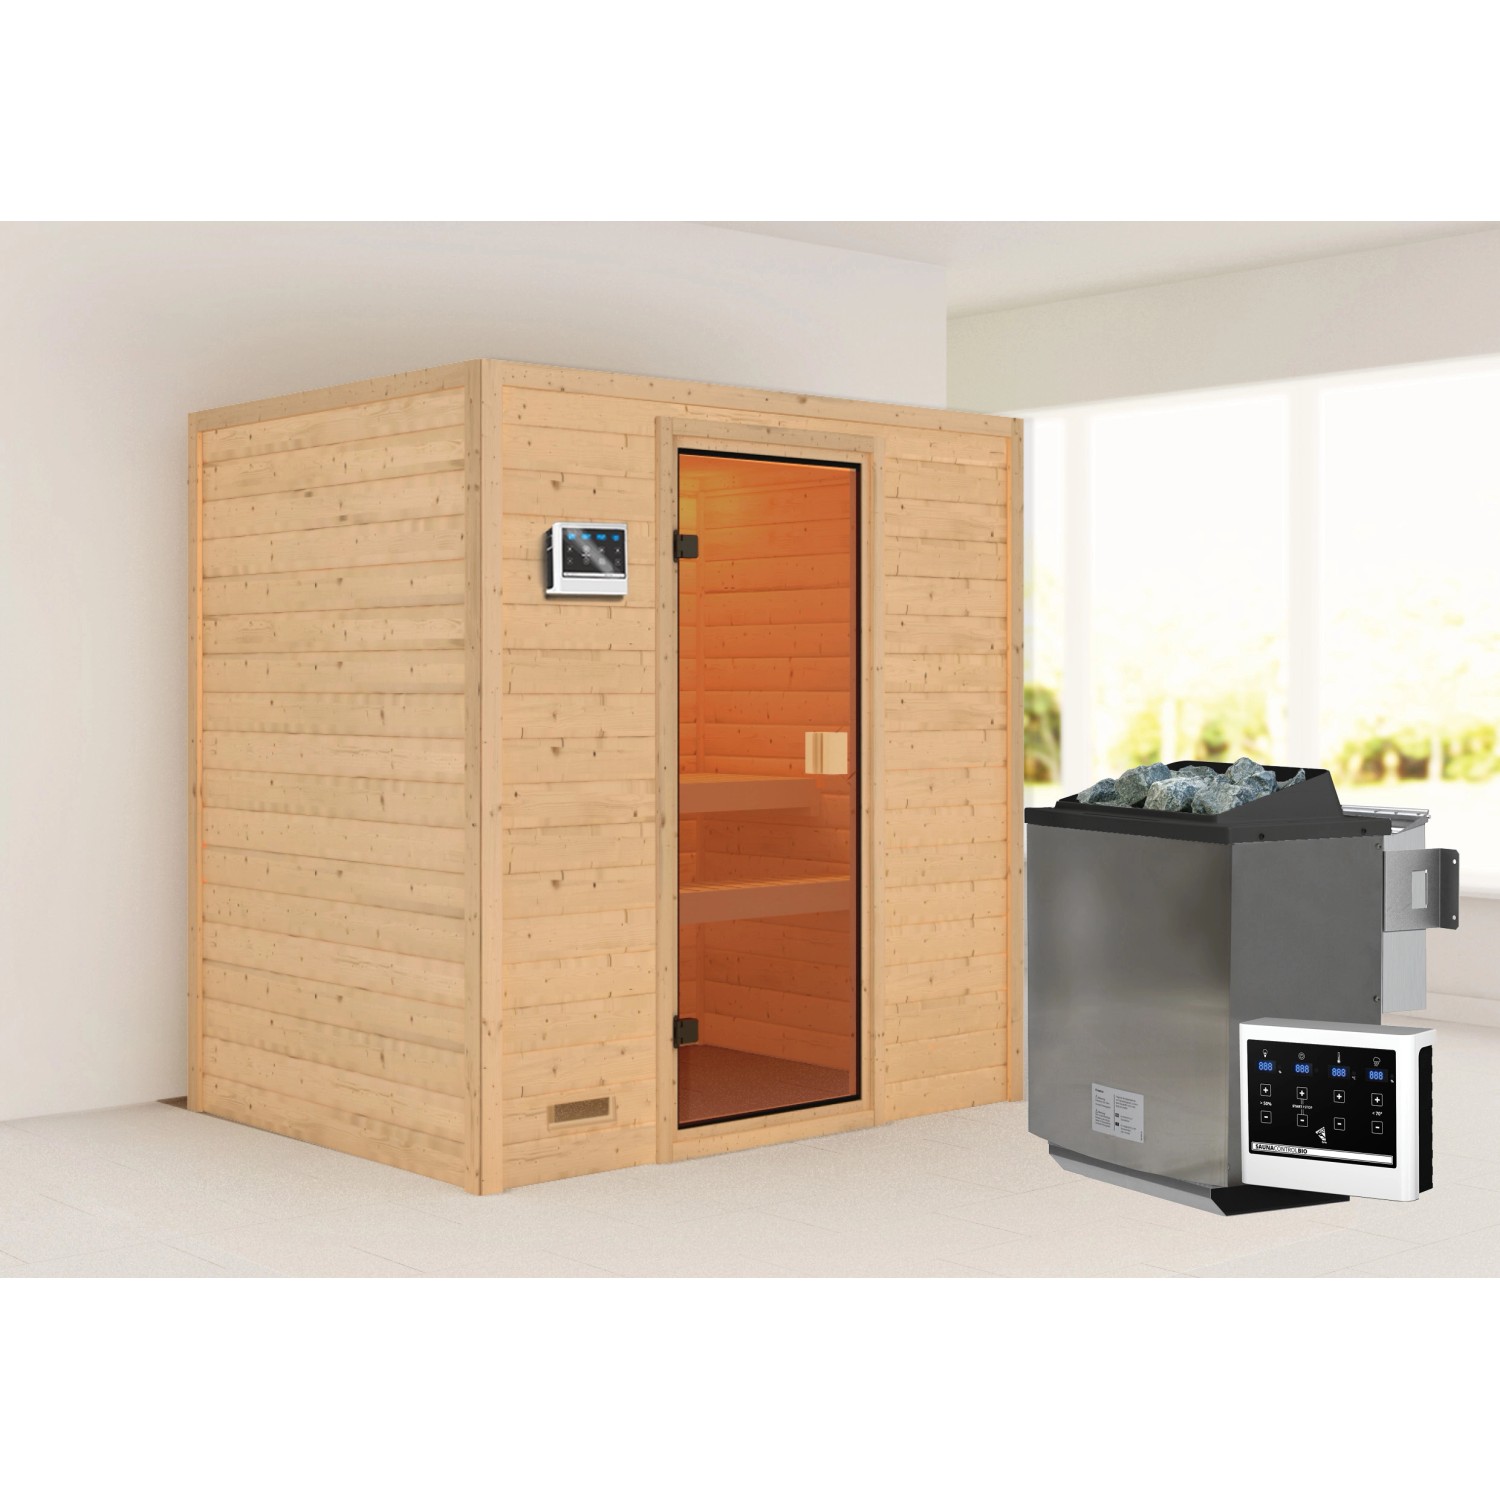 Woodfeeling Sauna Selena inkl. 9 kW Bio-Ofen mit ext. Strg. Glastür Bronziert von Woodfeeling